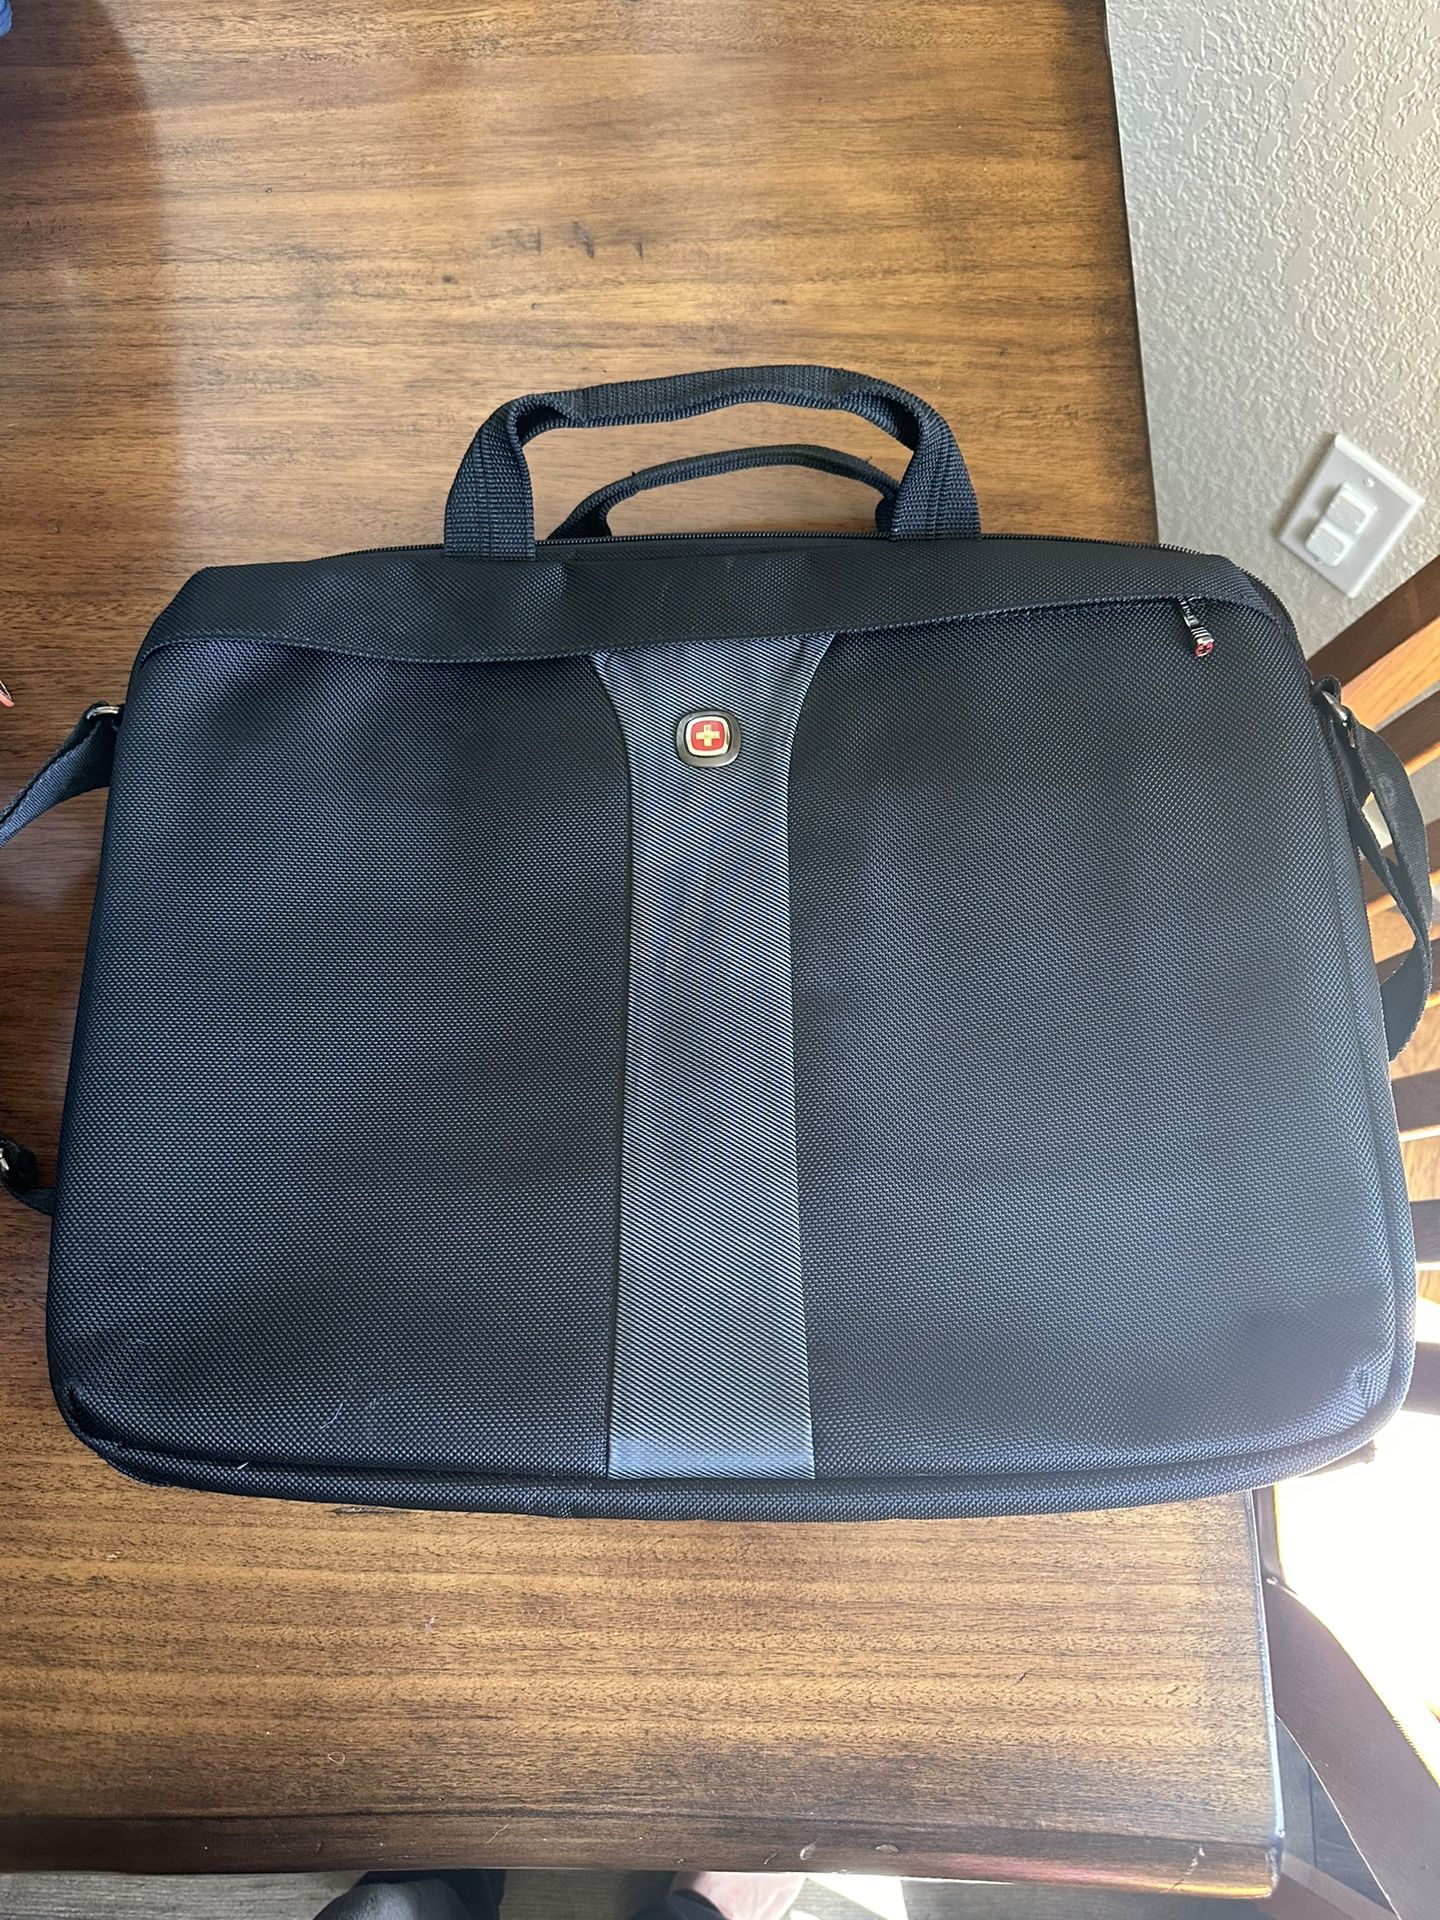 Swiss Travel Laptop Bag